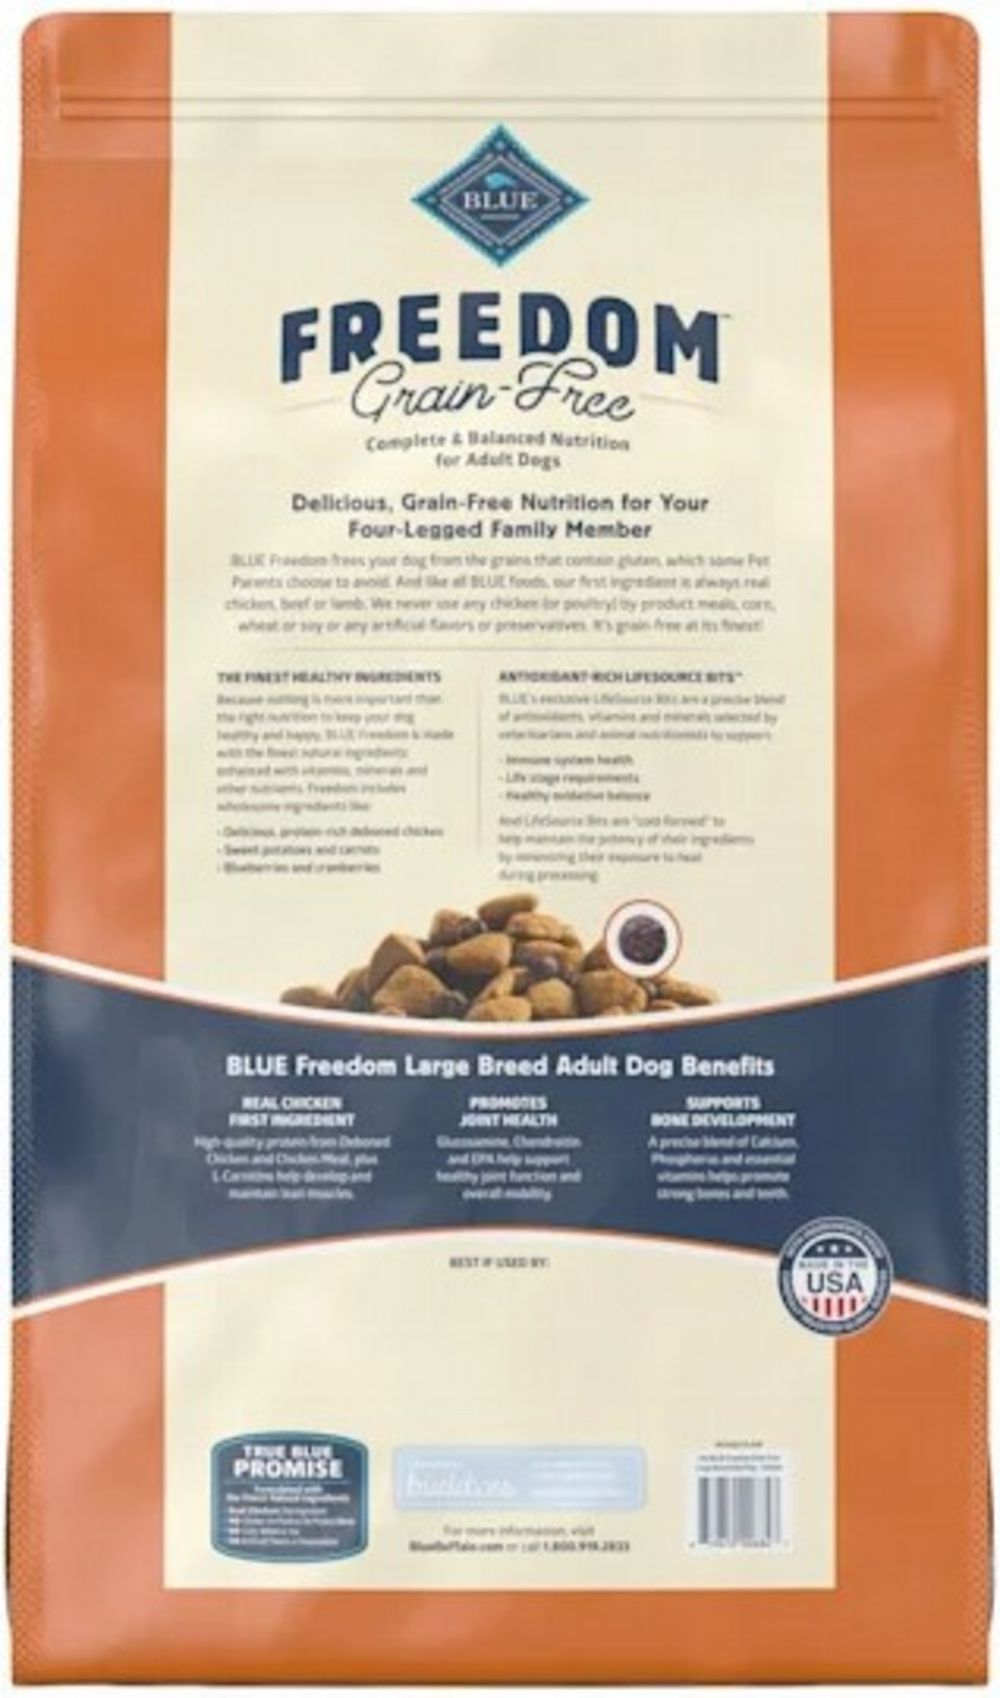 Blue Buffalo Freedom Grain-Free Large Breed Adult Chicken Recipe Dry Dog Food